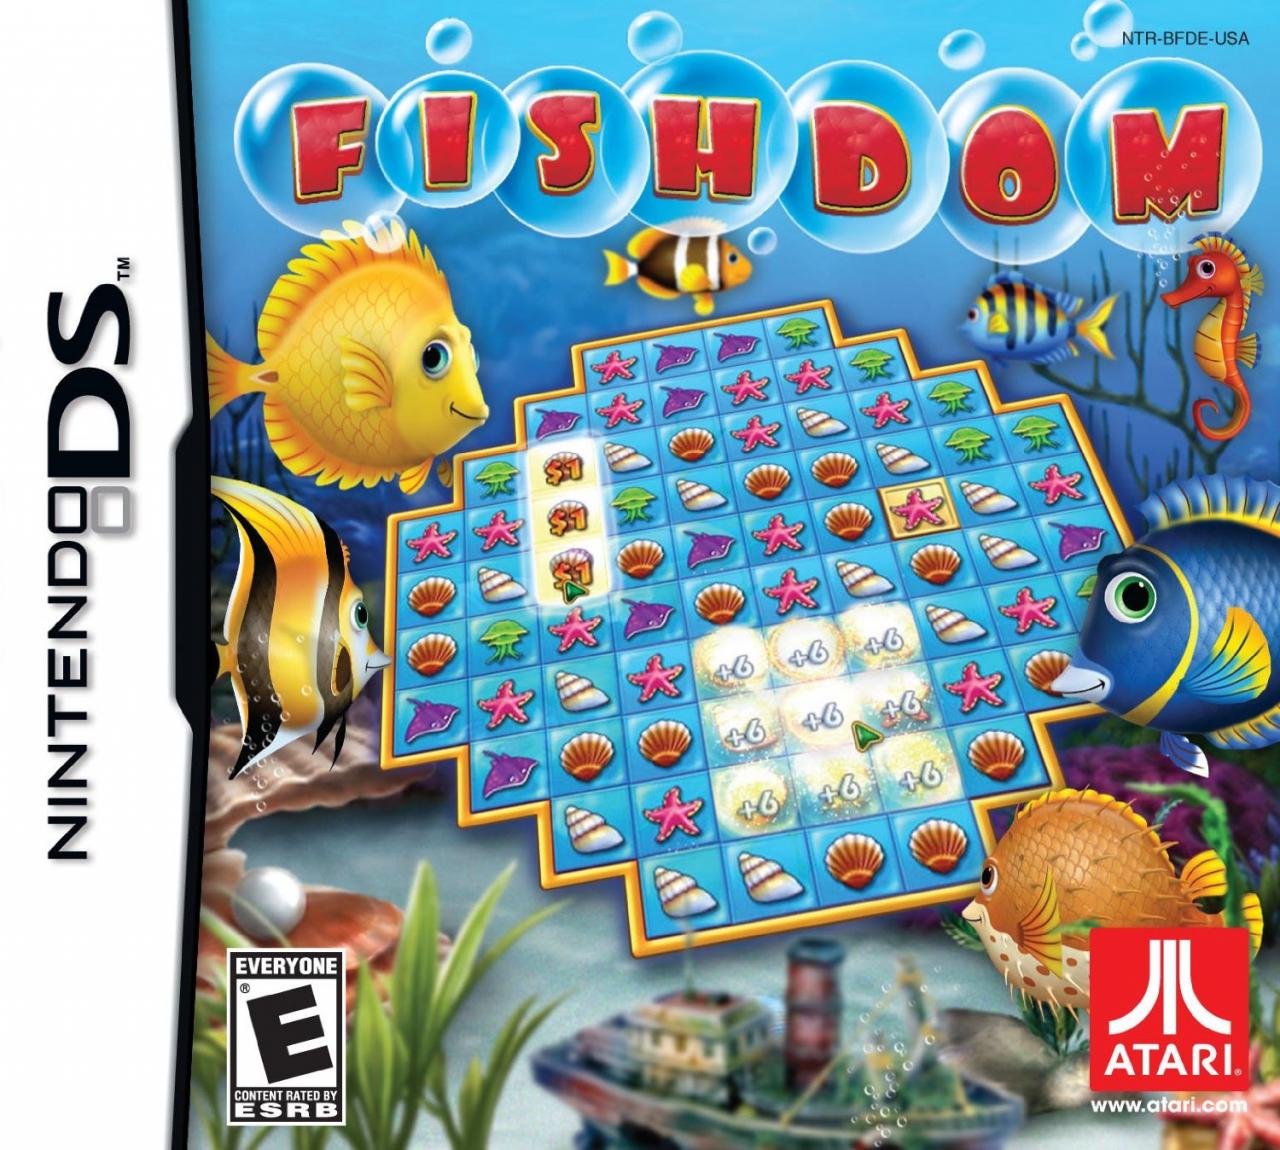 fishdome free game